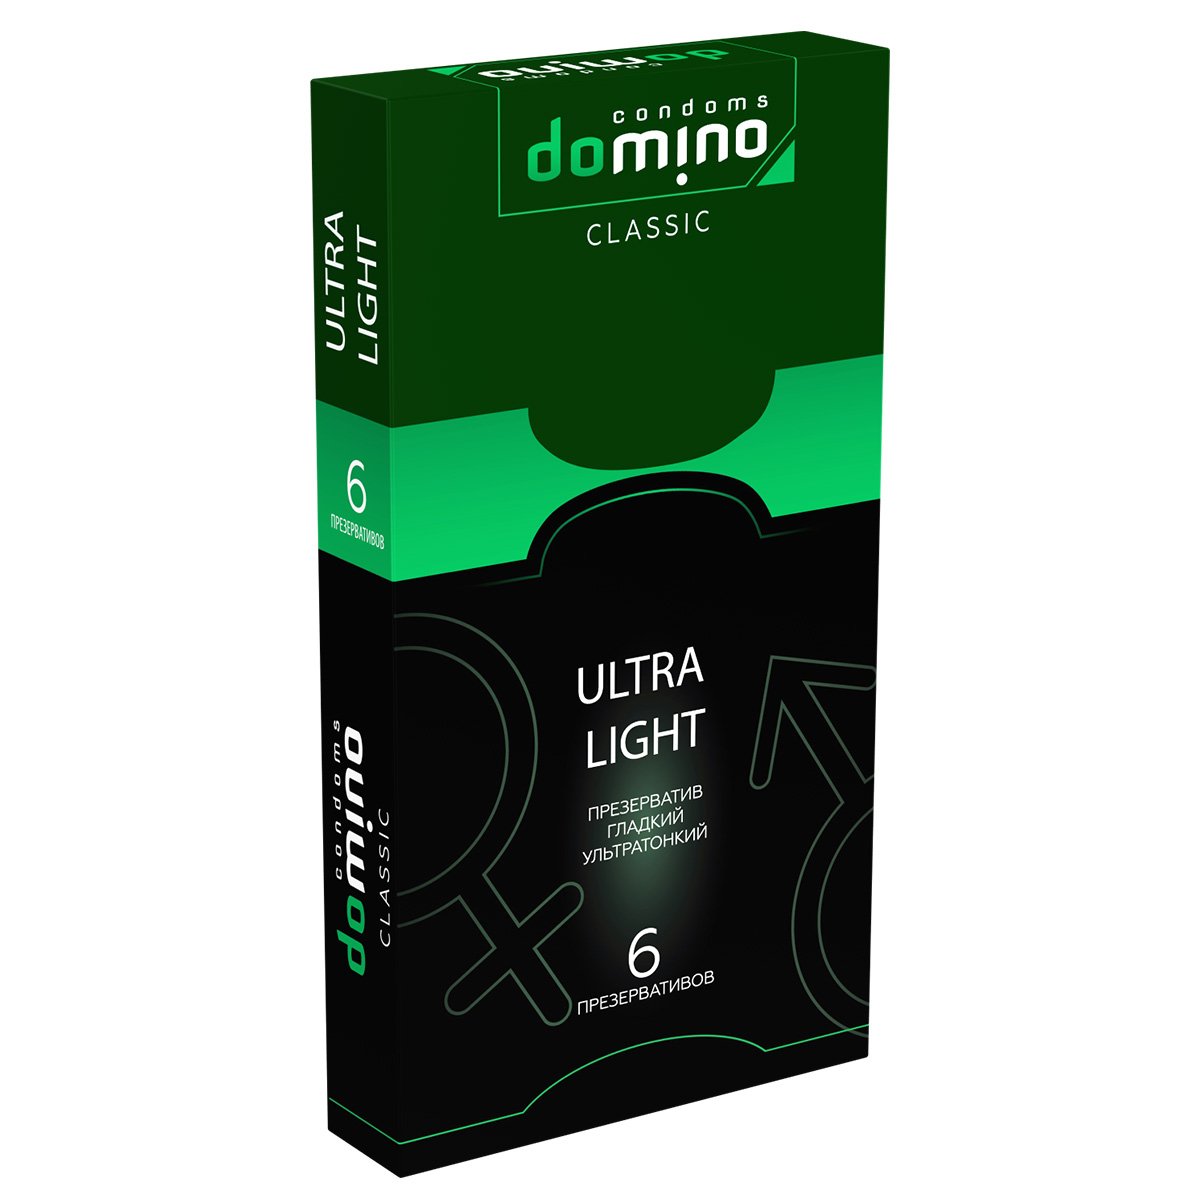  DOMINO CLASSIC ULTRA LIGHT 6 